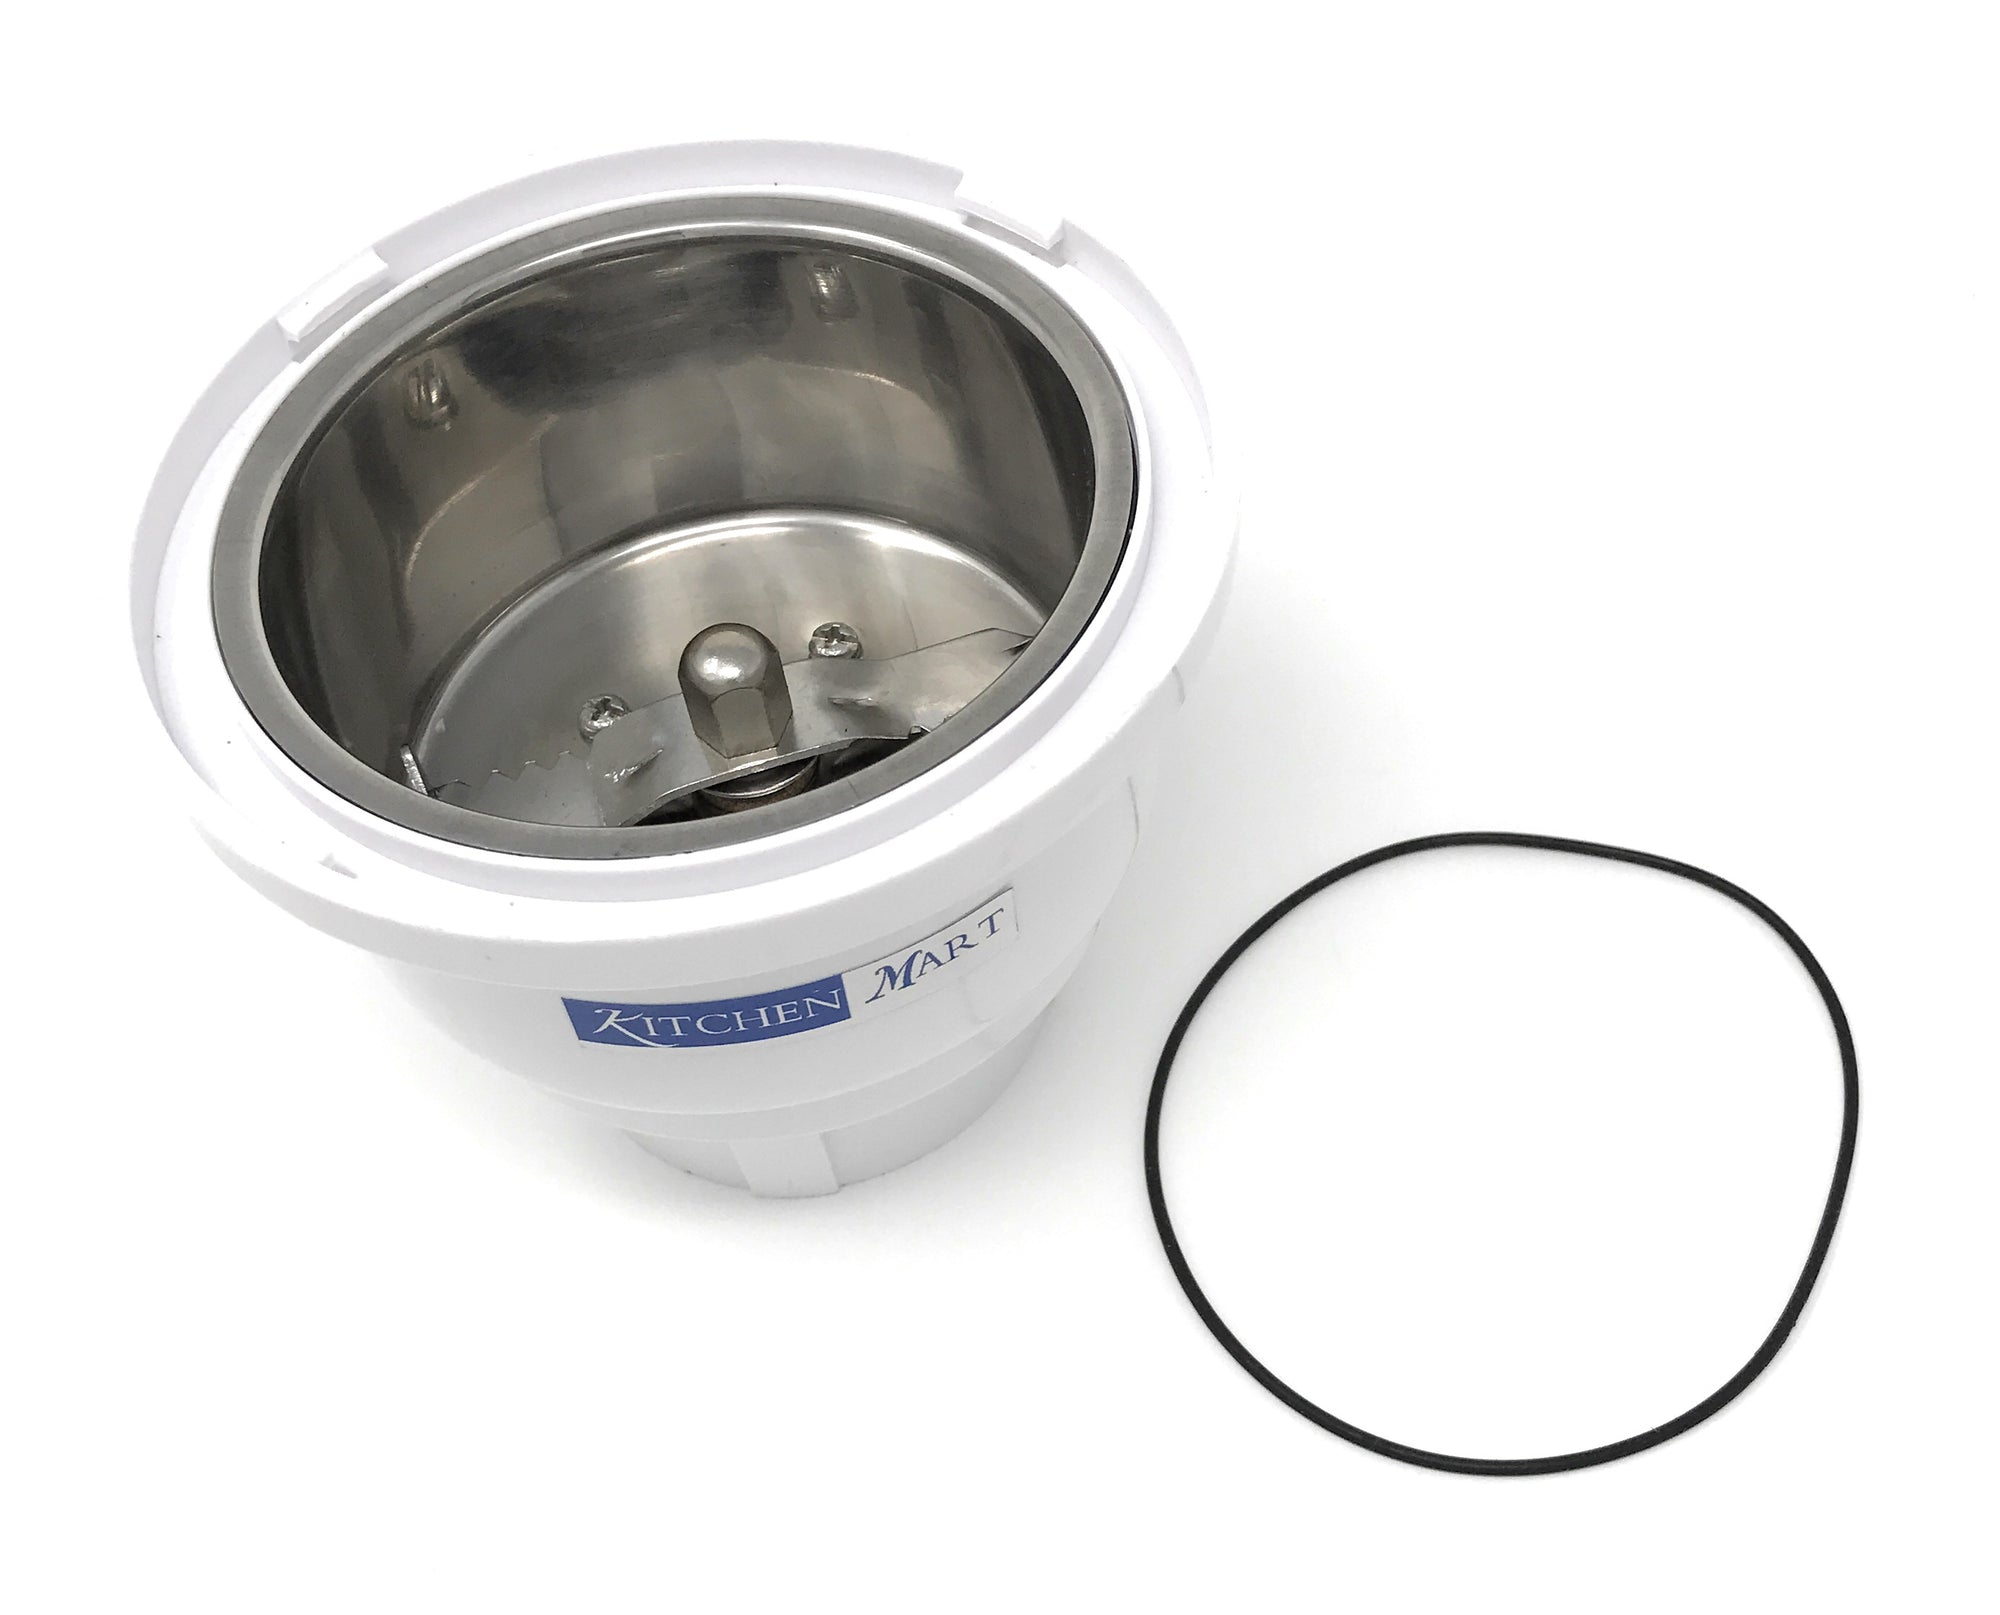 Replacement Gasket for Preethi Platinum Mixer Chutney Jar MGA502